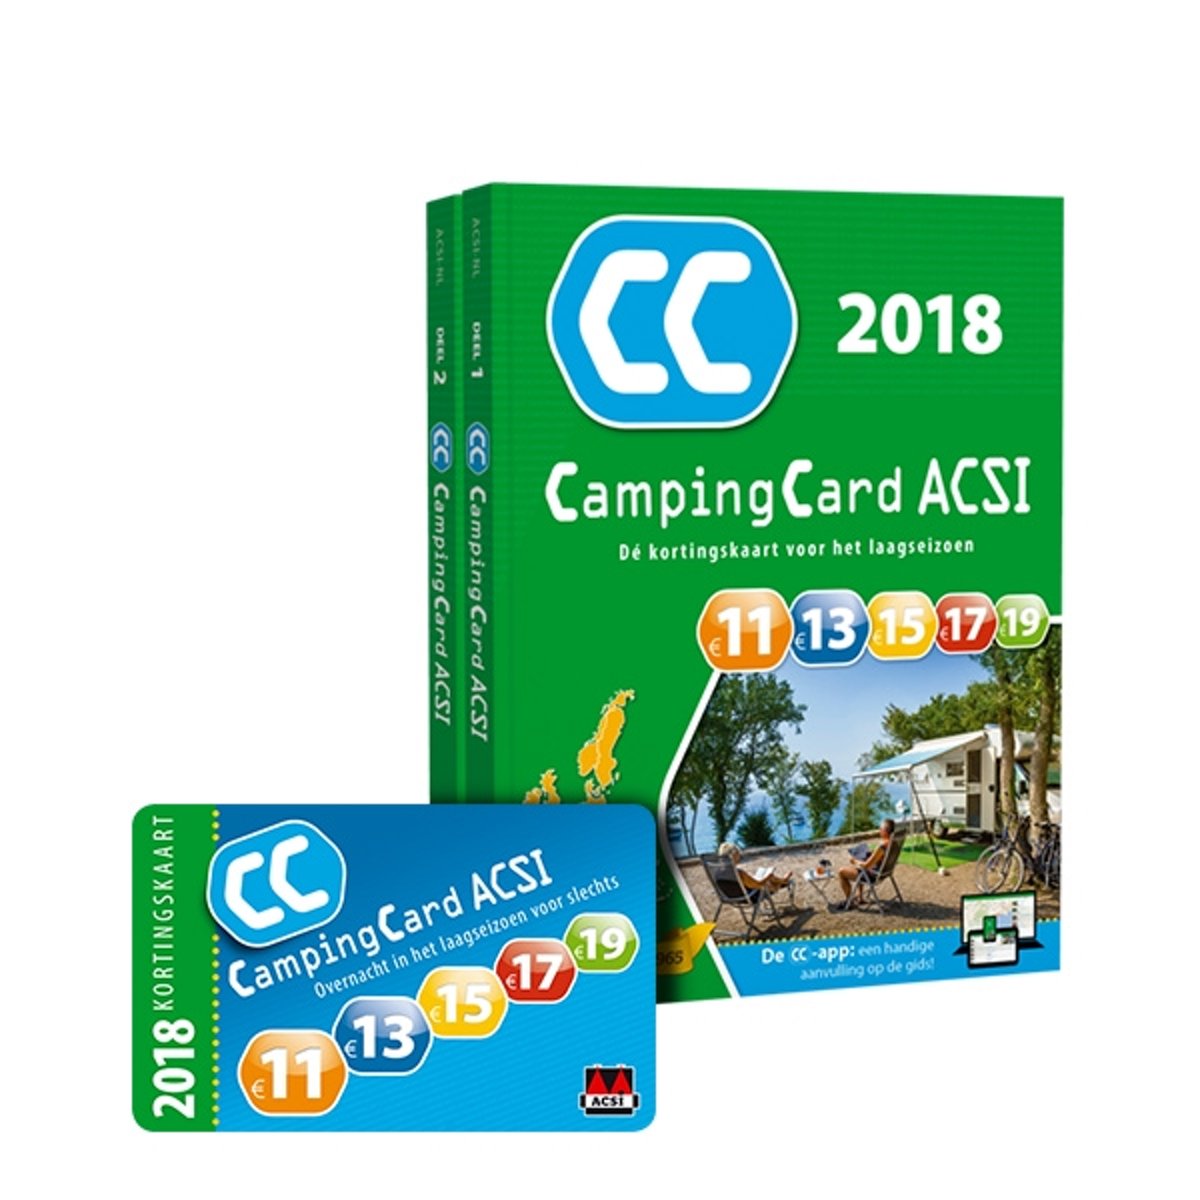 ACSI Campinggids - CampingCard ACSI 2018 - set 2 delen